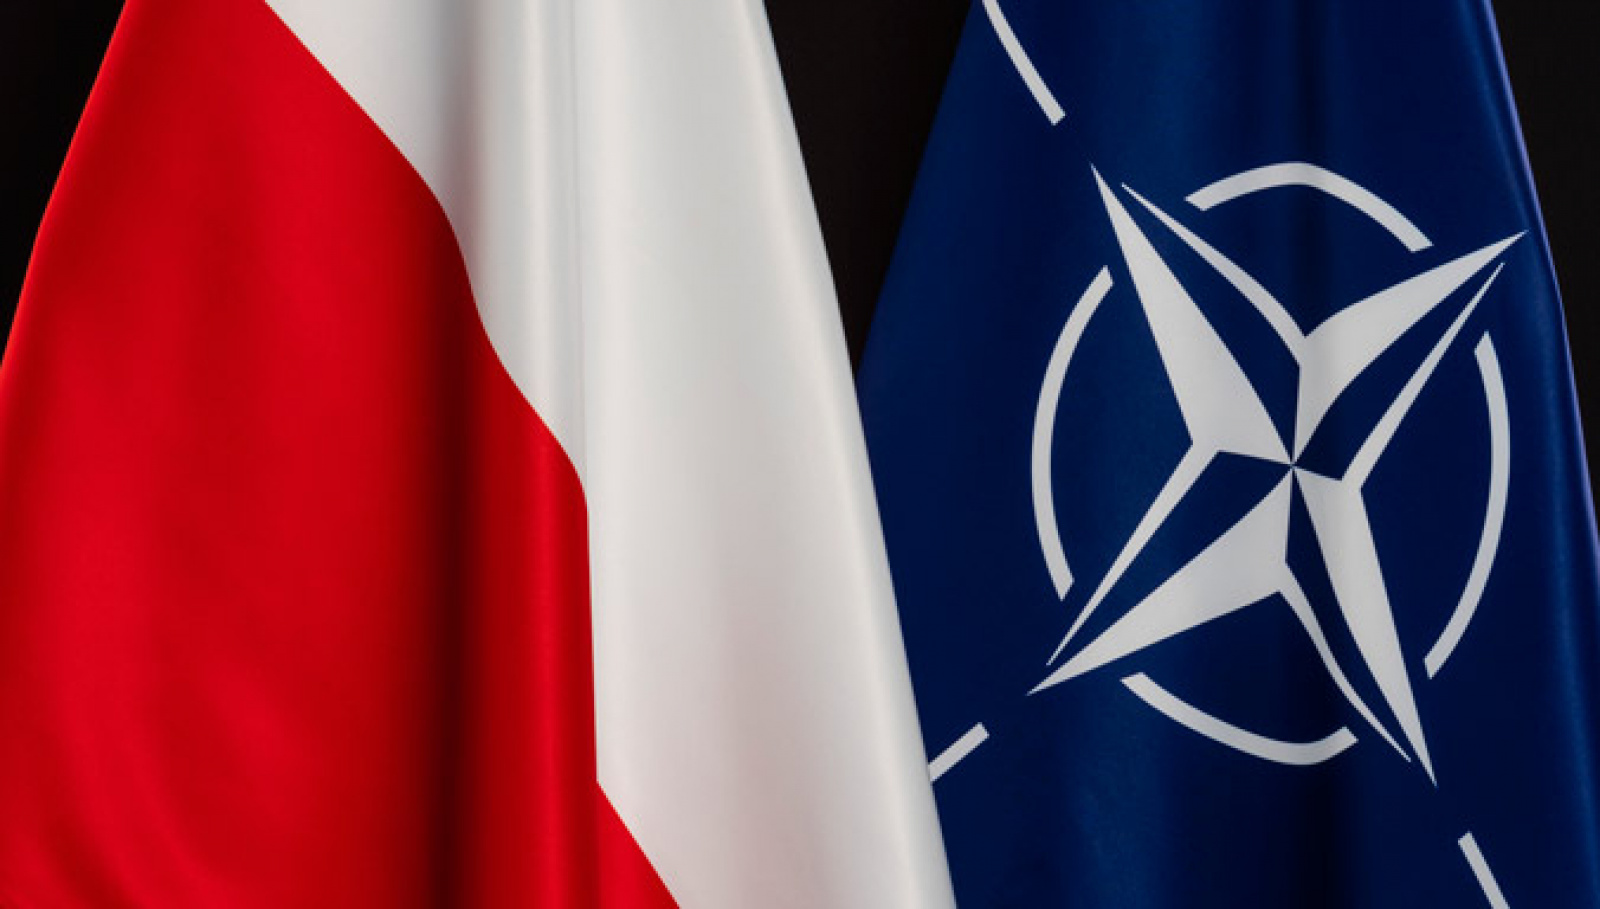 Польша находится в нато. НАТО Отан. Италия НАТО. Польша НАТО. Польша в НАТО И ЕС.